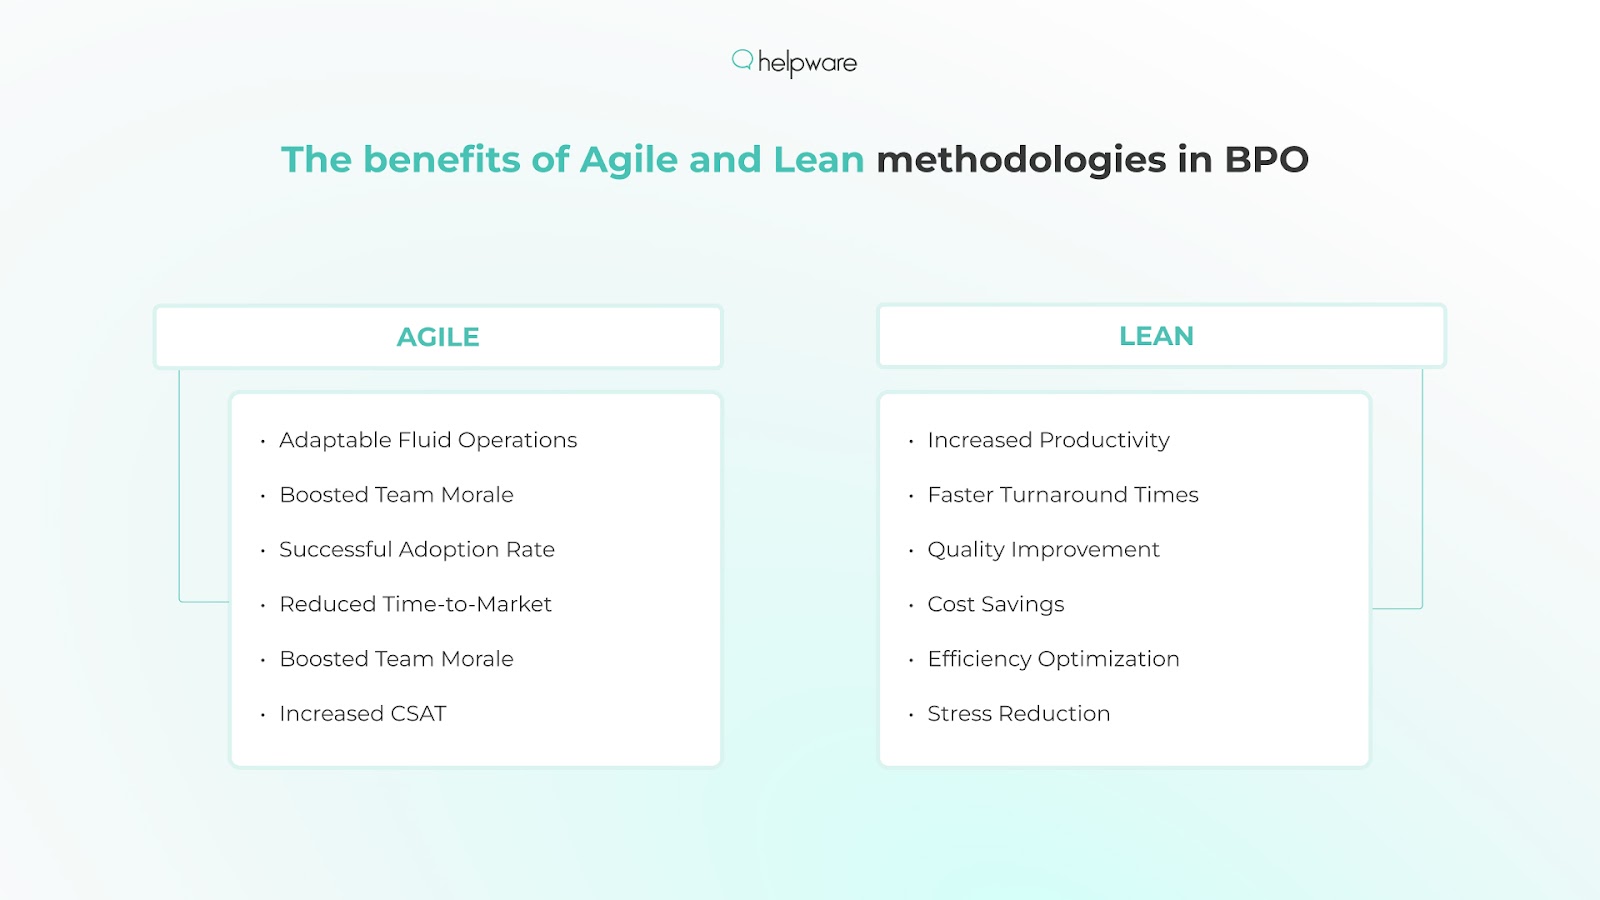 The benefits of Agile and Lean methodologies in BPO